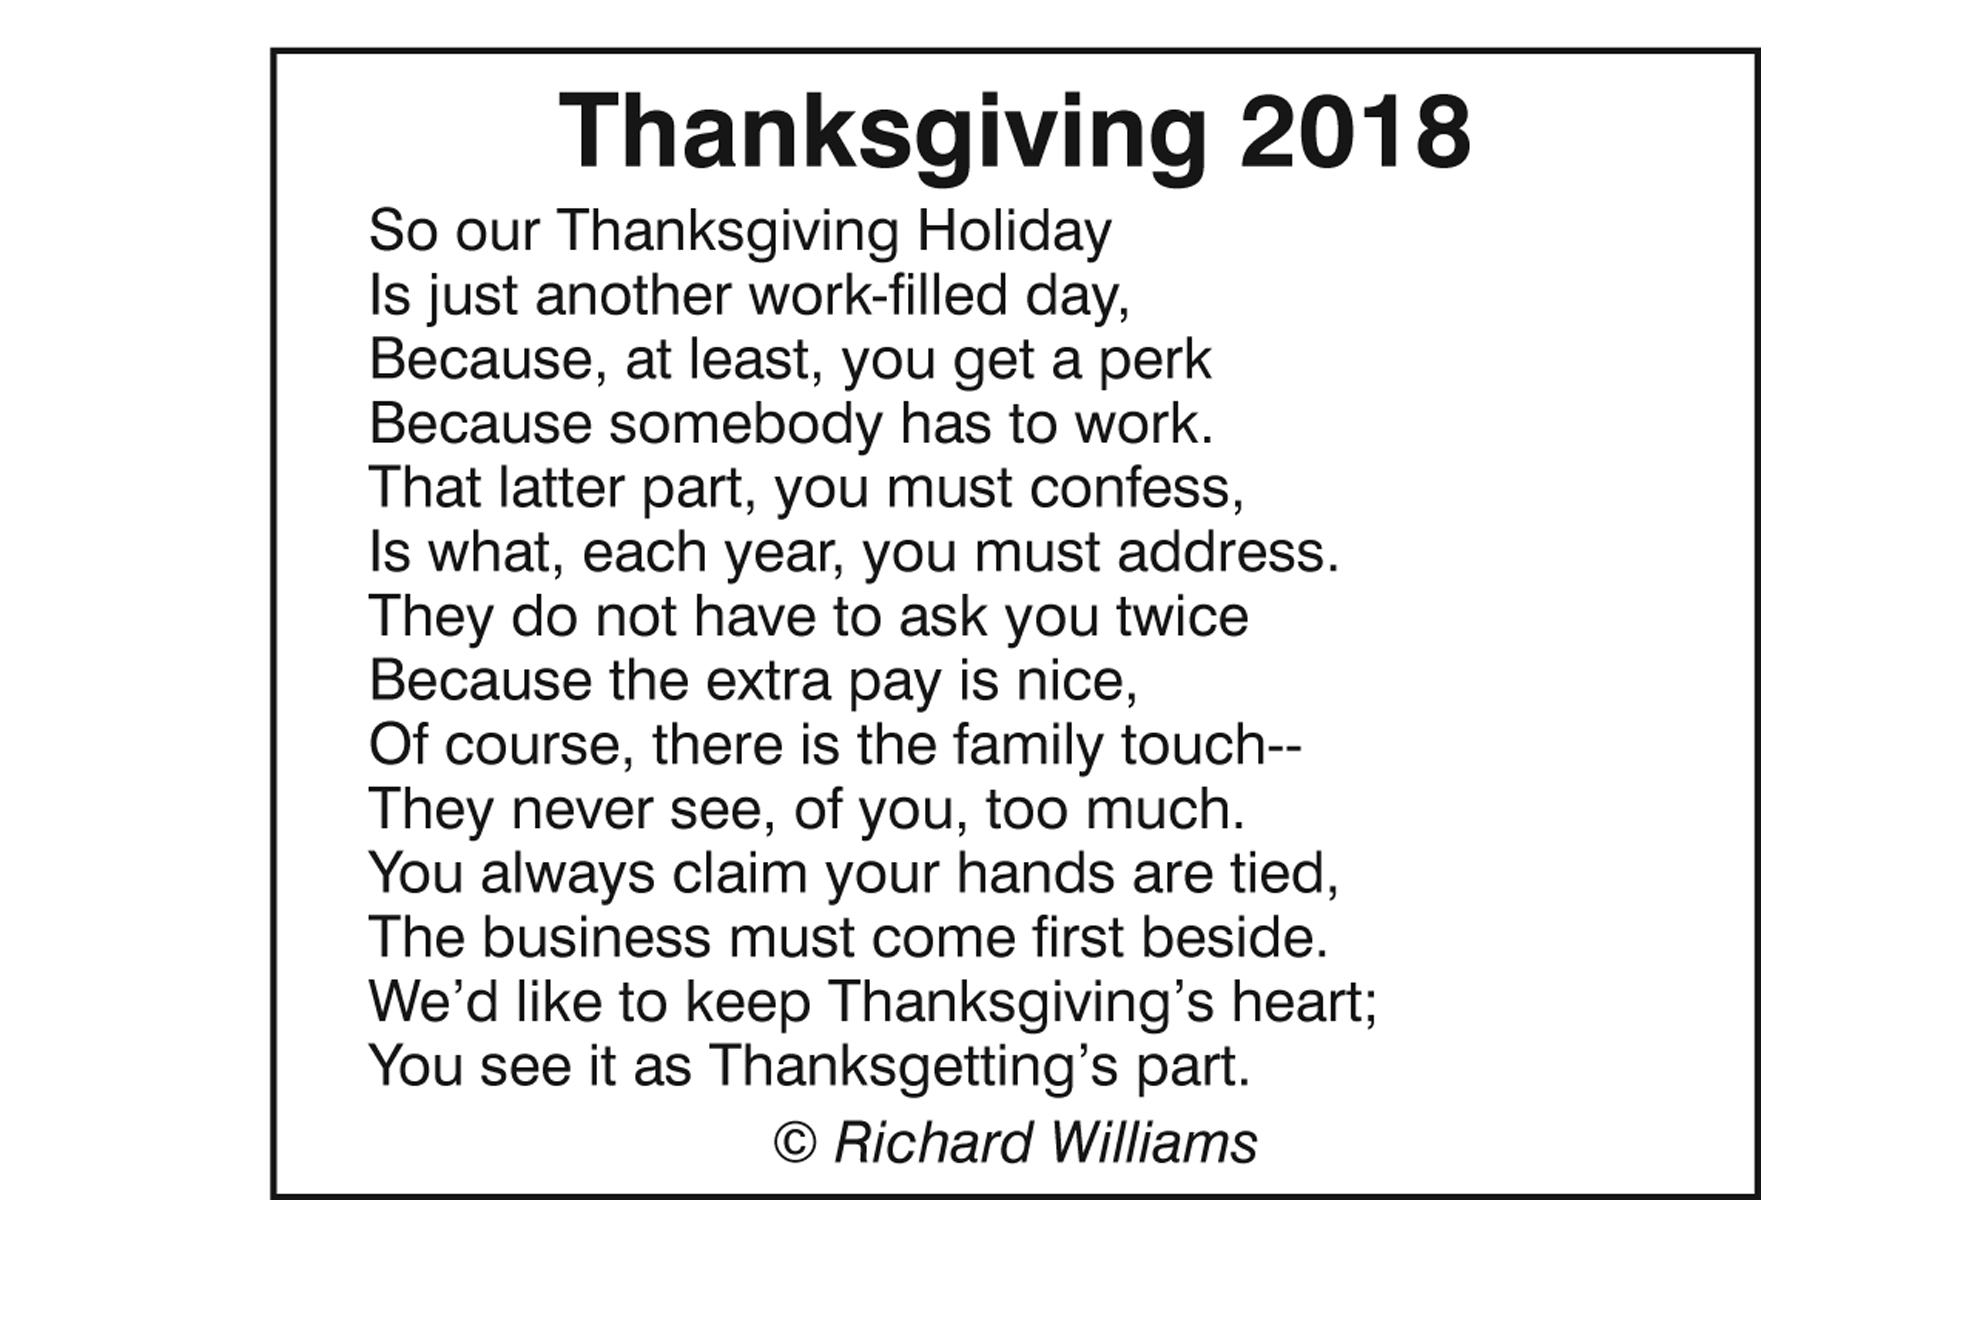 Richard Williams Poem: Thanksgiving 2018